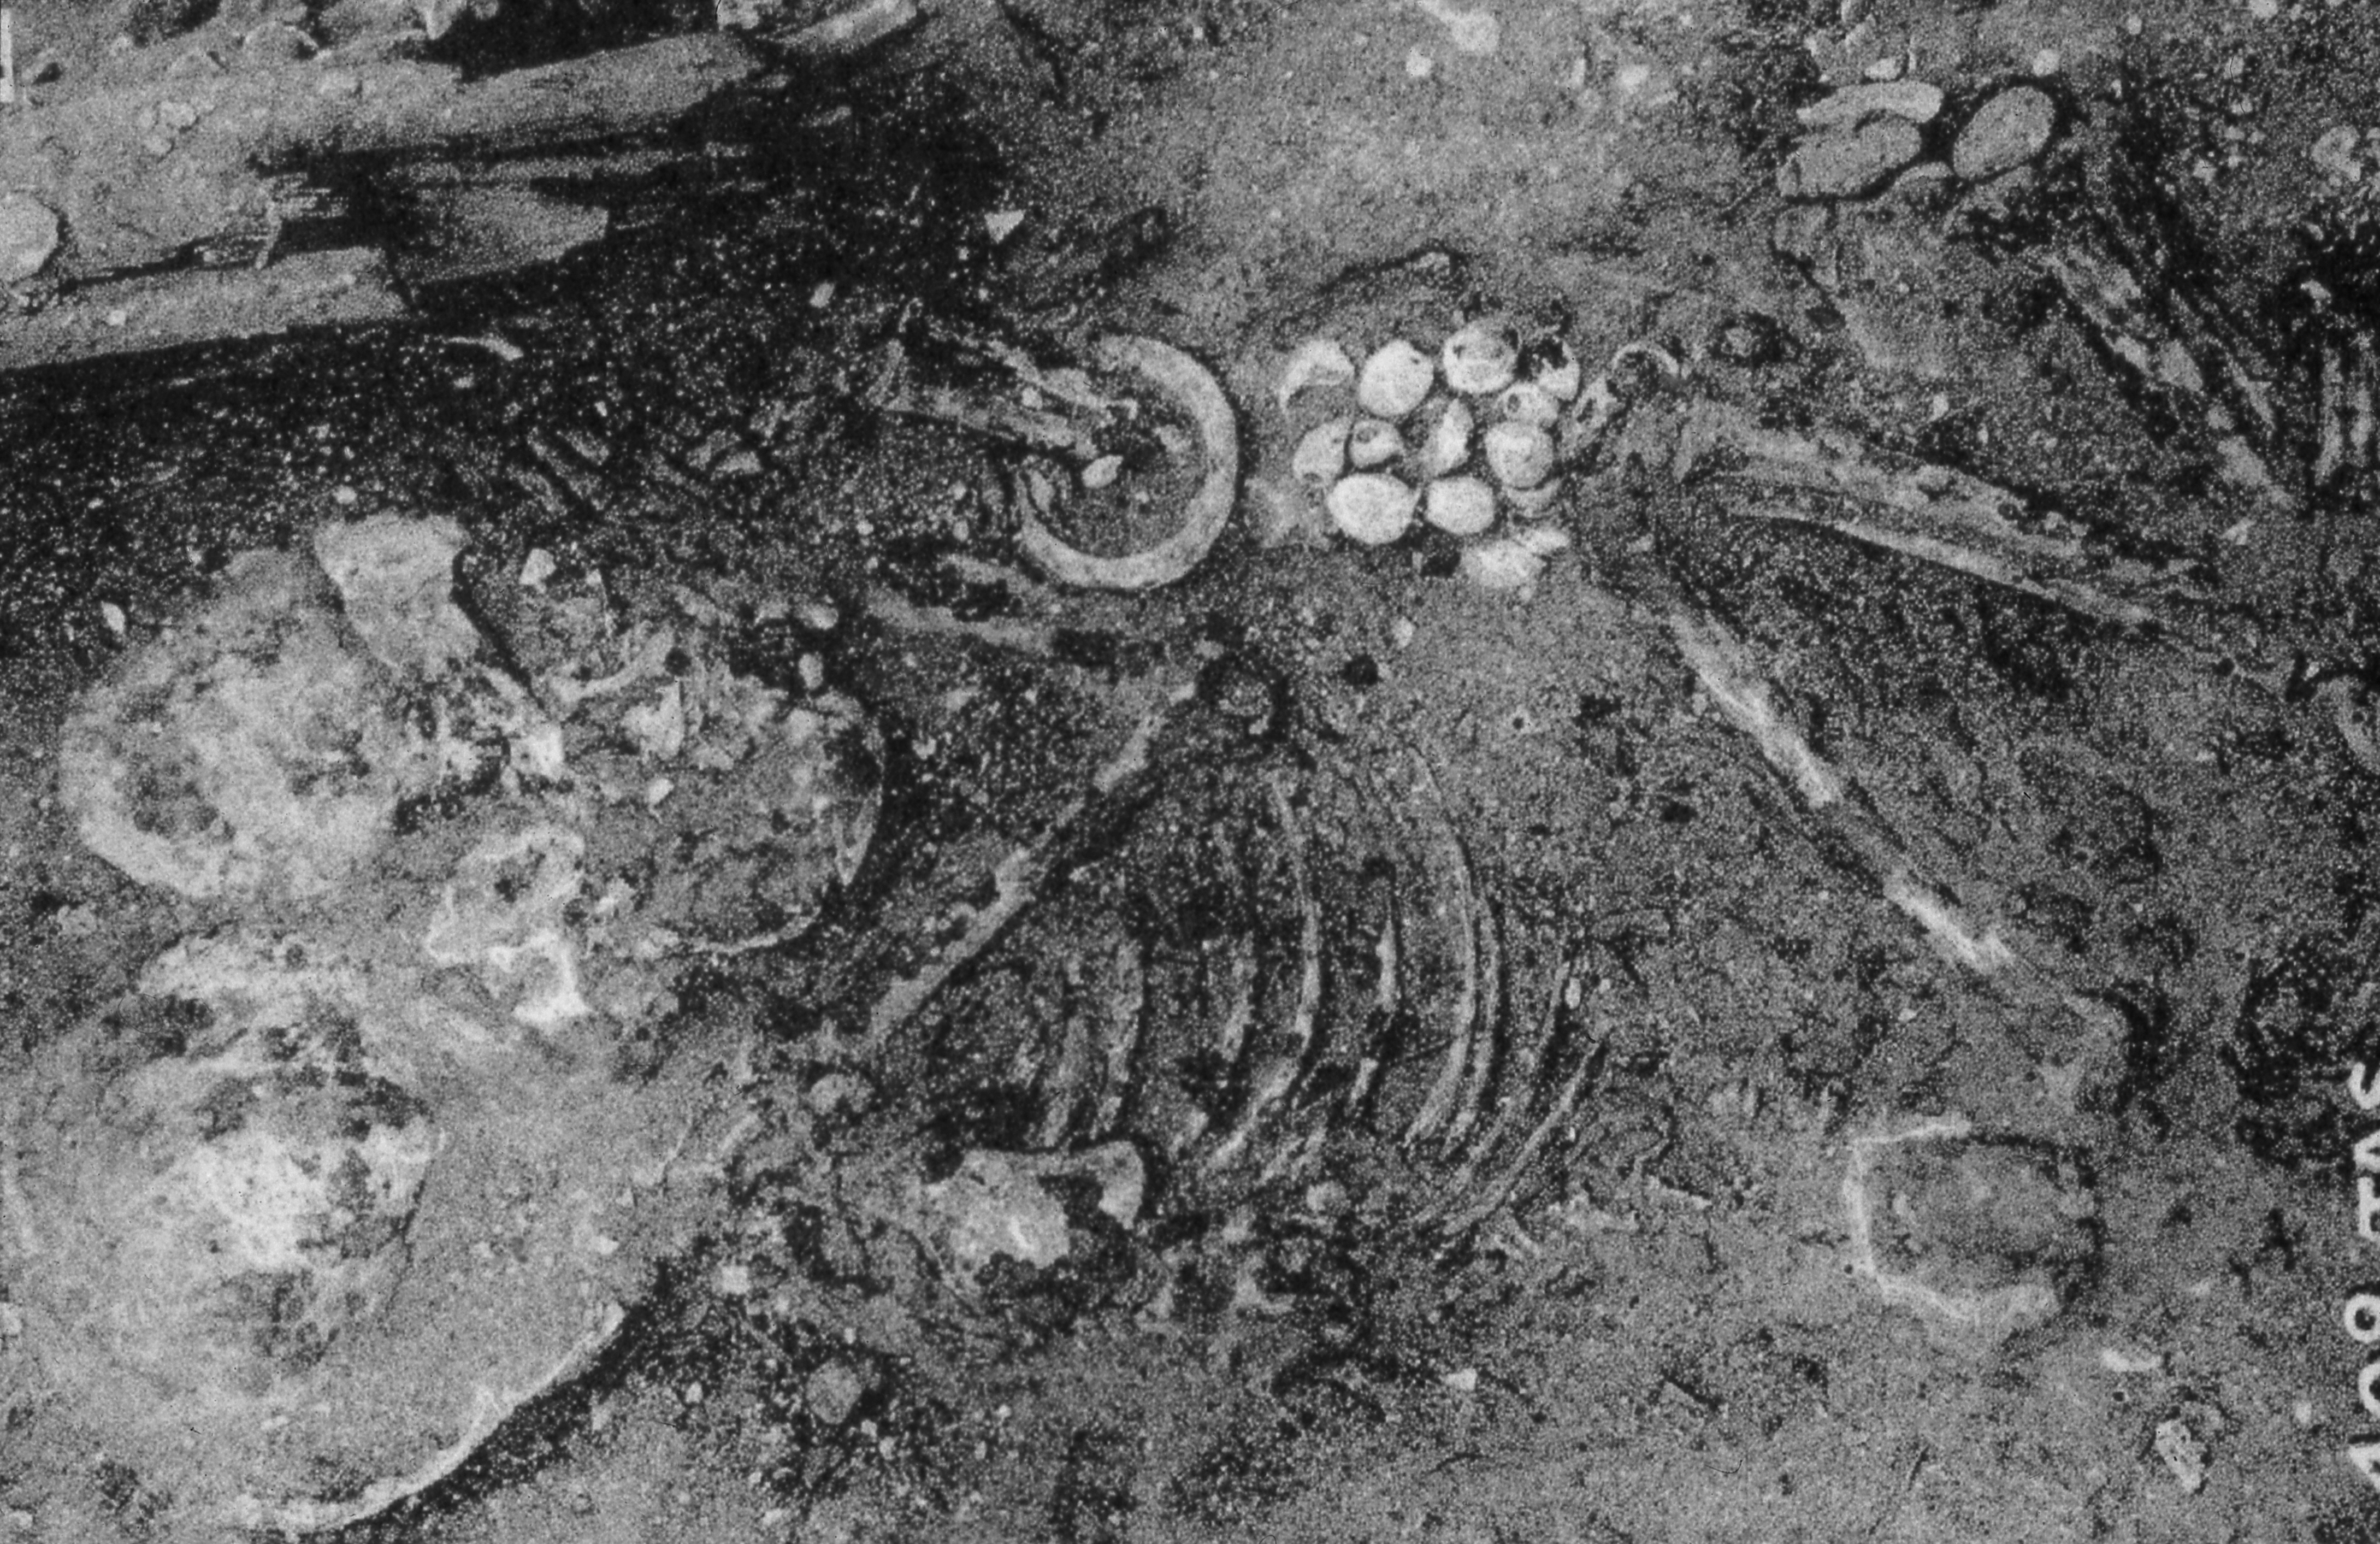 Image: Grave 408, Mostagedda. Late Neolithic/Tasian. Credit: G. Brunton, Mostagedda and the Tasian Culture (London 1937) Pl. VI.